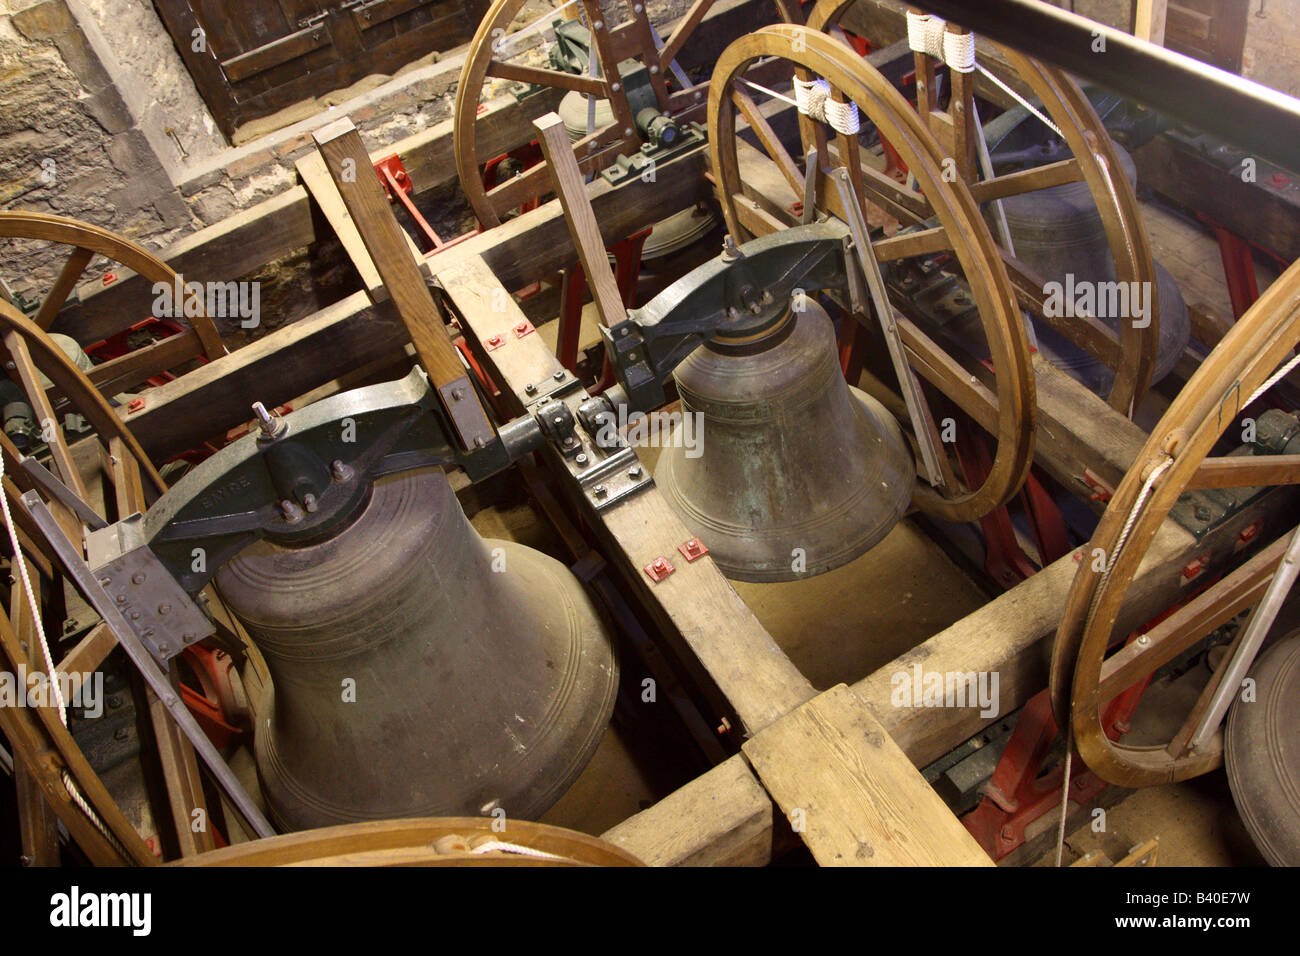 church bell, church bells Stock Photo - Alamy